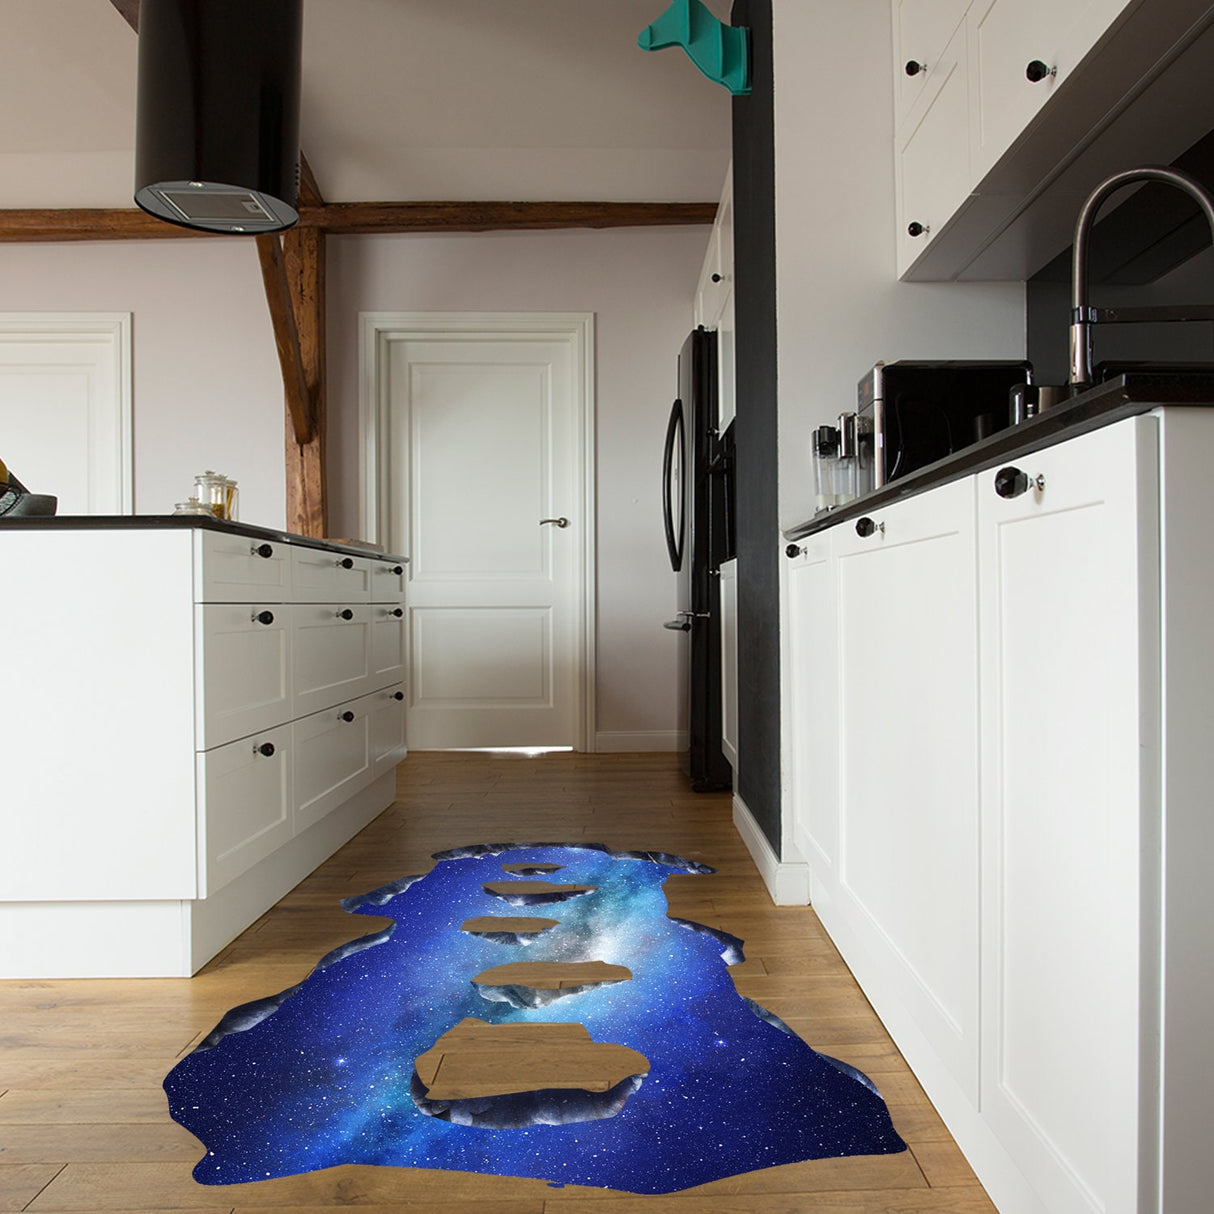 3D Floor Space  Portal Hole Decal - Galaxy Art Sticker Decor For Kid Teen Living Room Bathroom